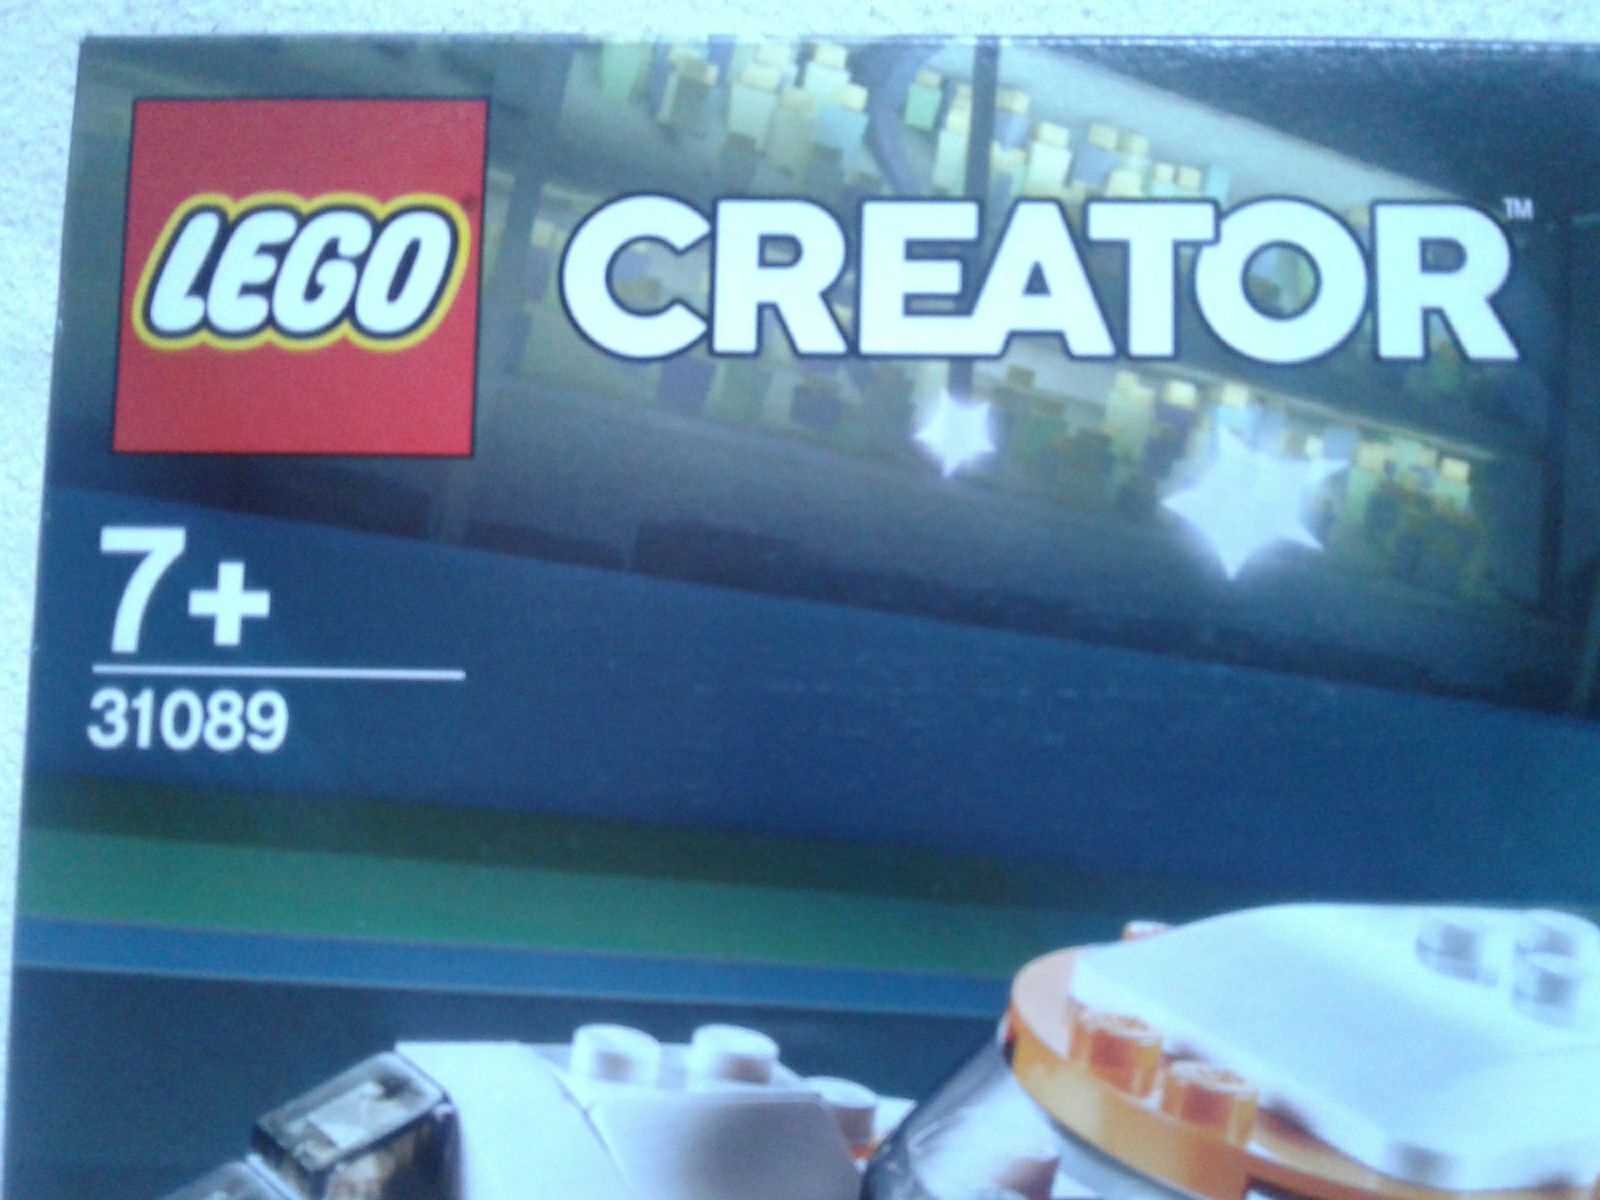 Set 3in1 Lego Creator 31089 masini si barca de curse, nou, sigilat